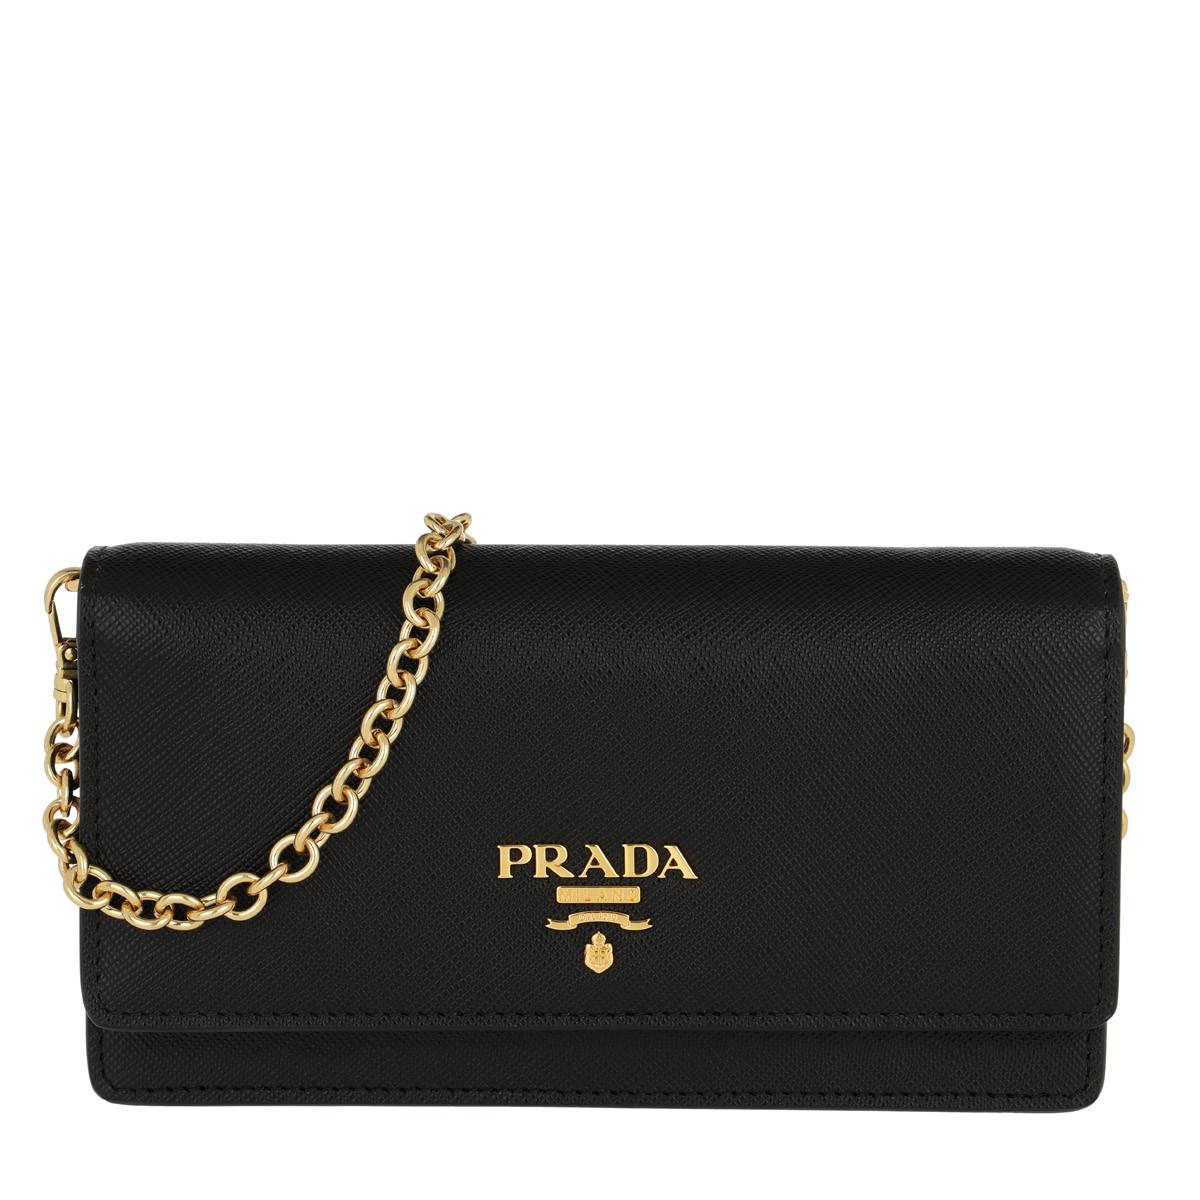 prada wallet on chain black